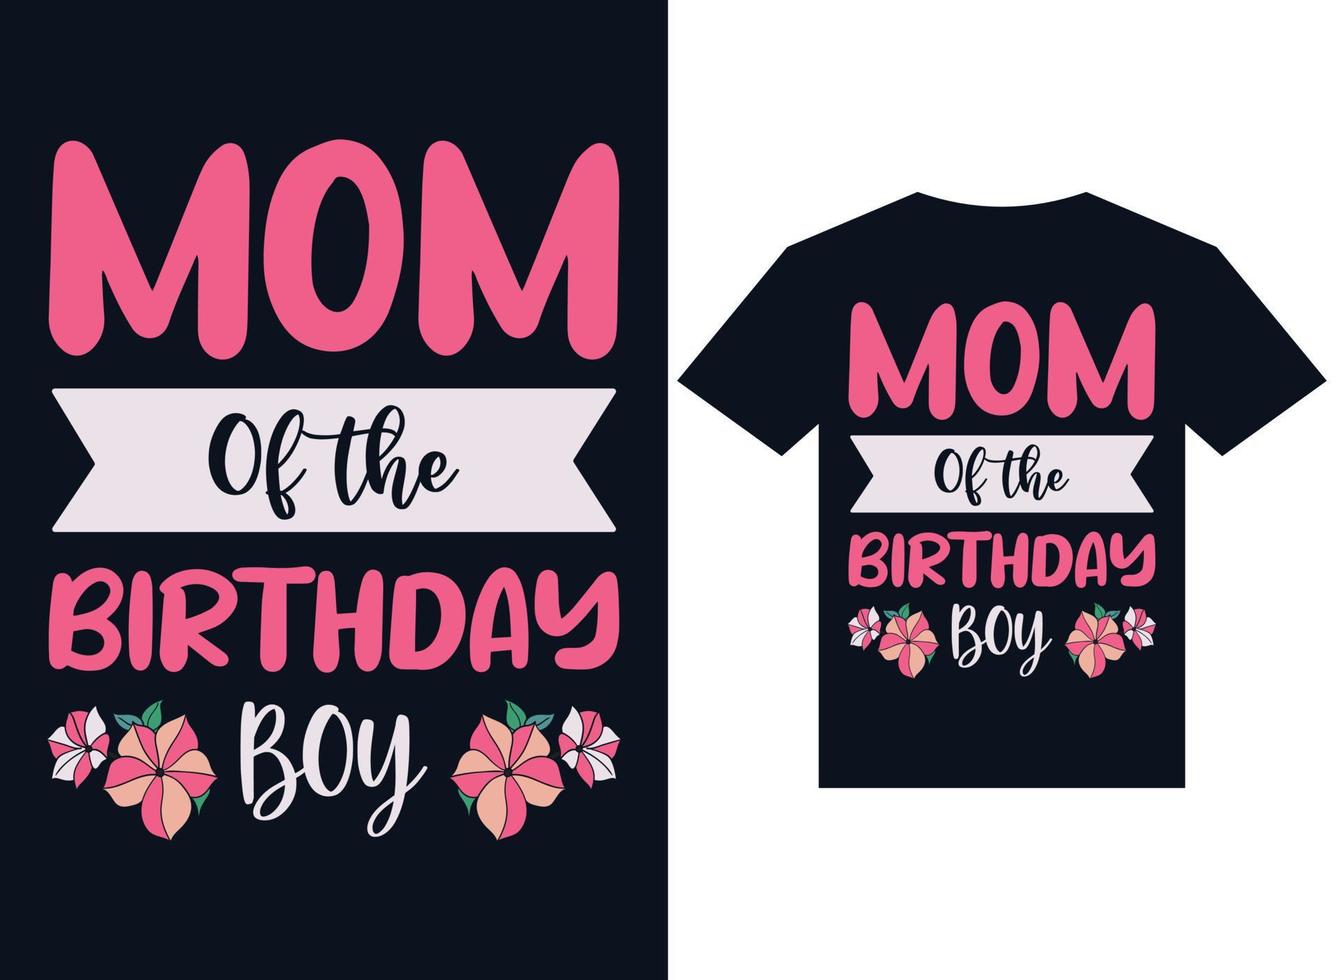 mom of the birthday boy t-shirt design typography vector illustration for printing